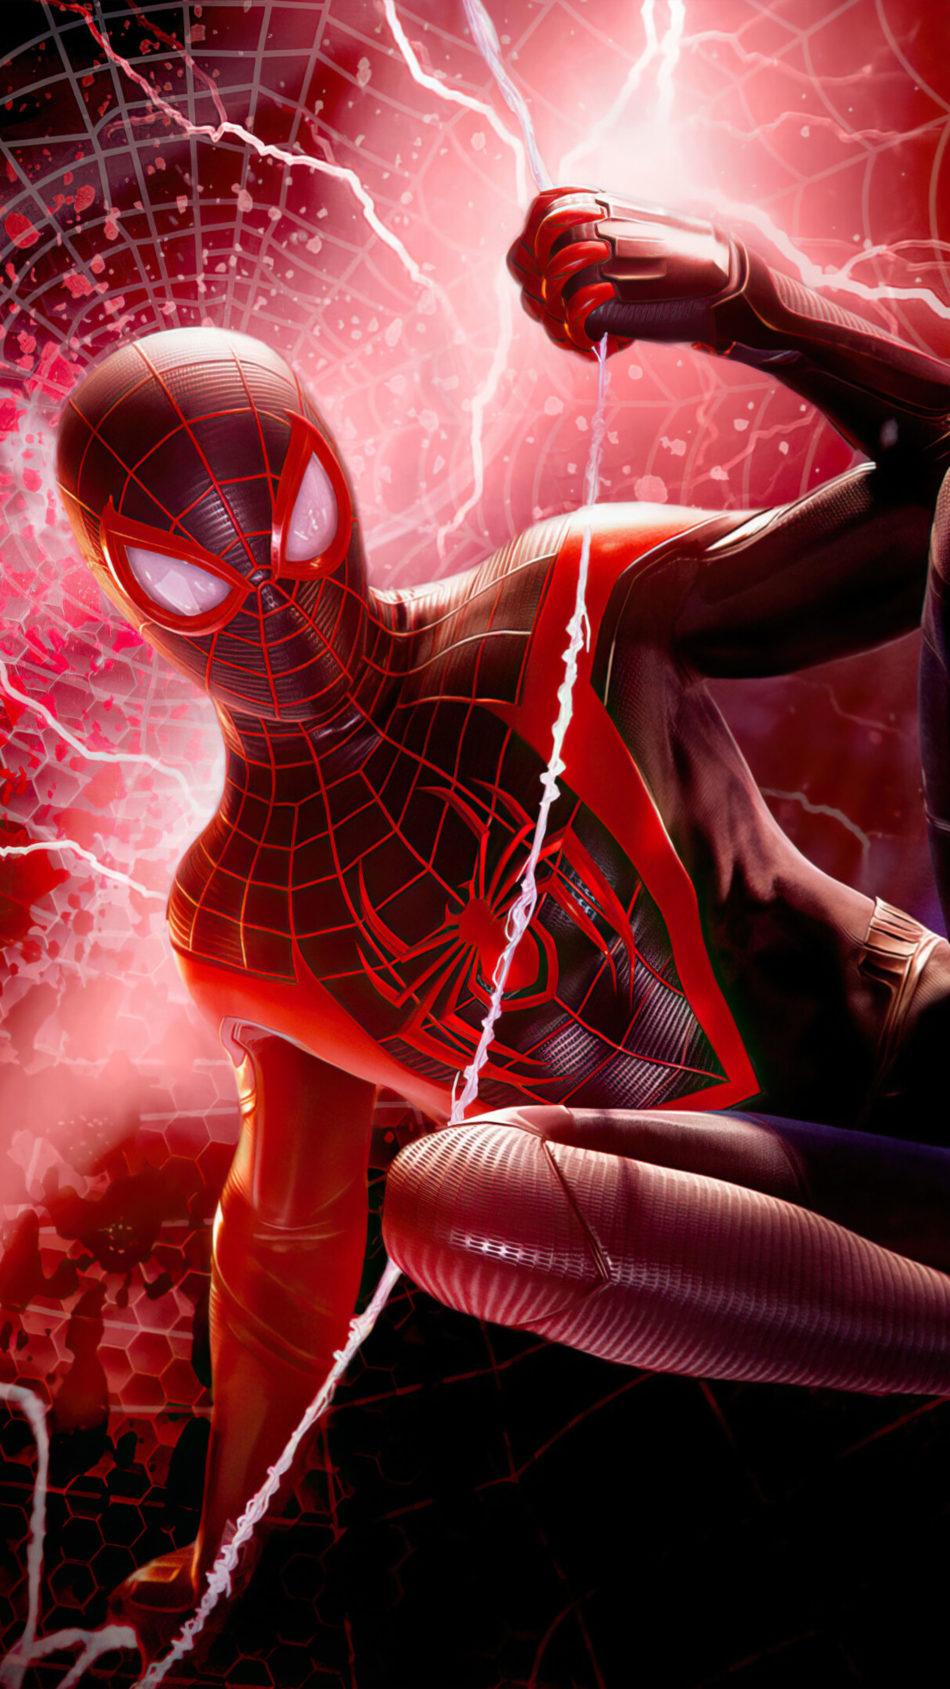 Spider-man Miles Morales Game Action 4K Ultra HD Mobile Wallpaper